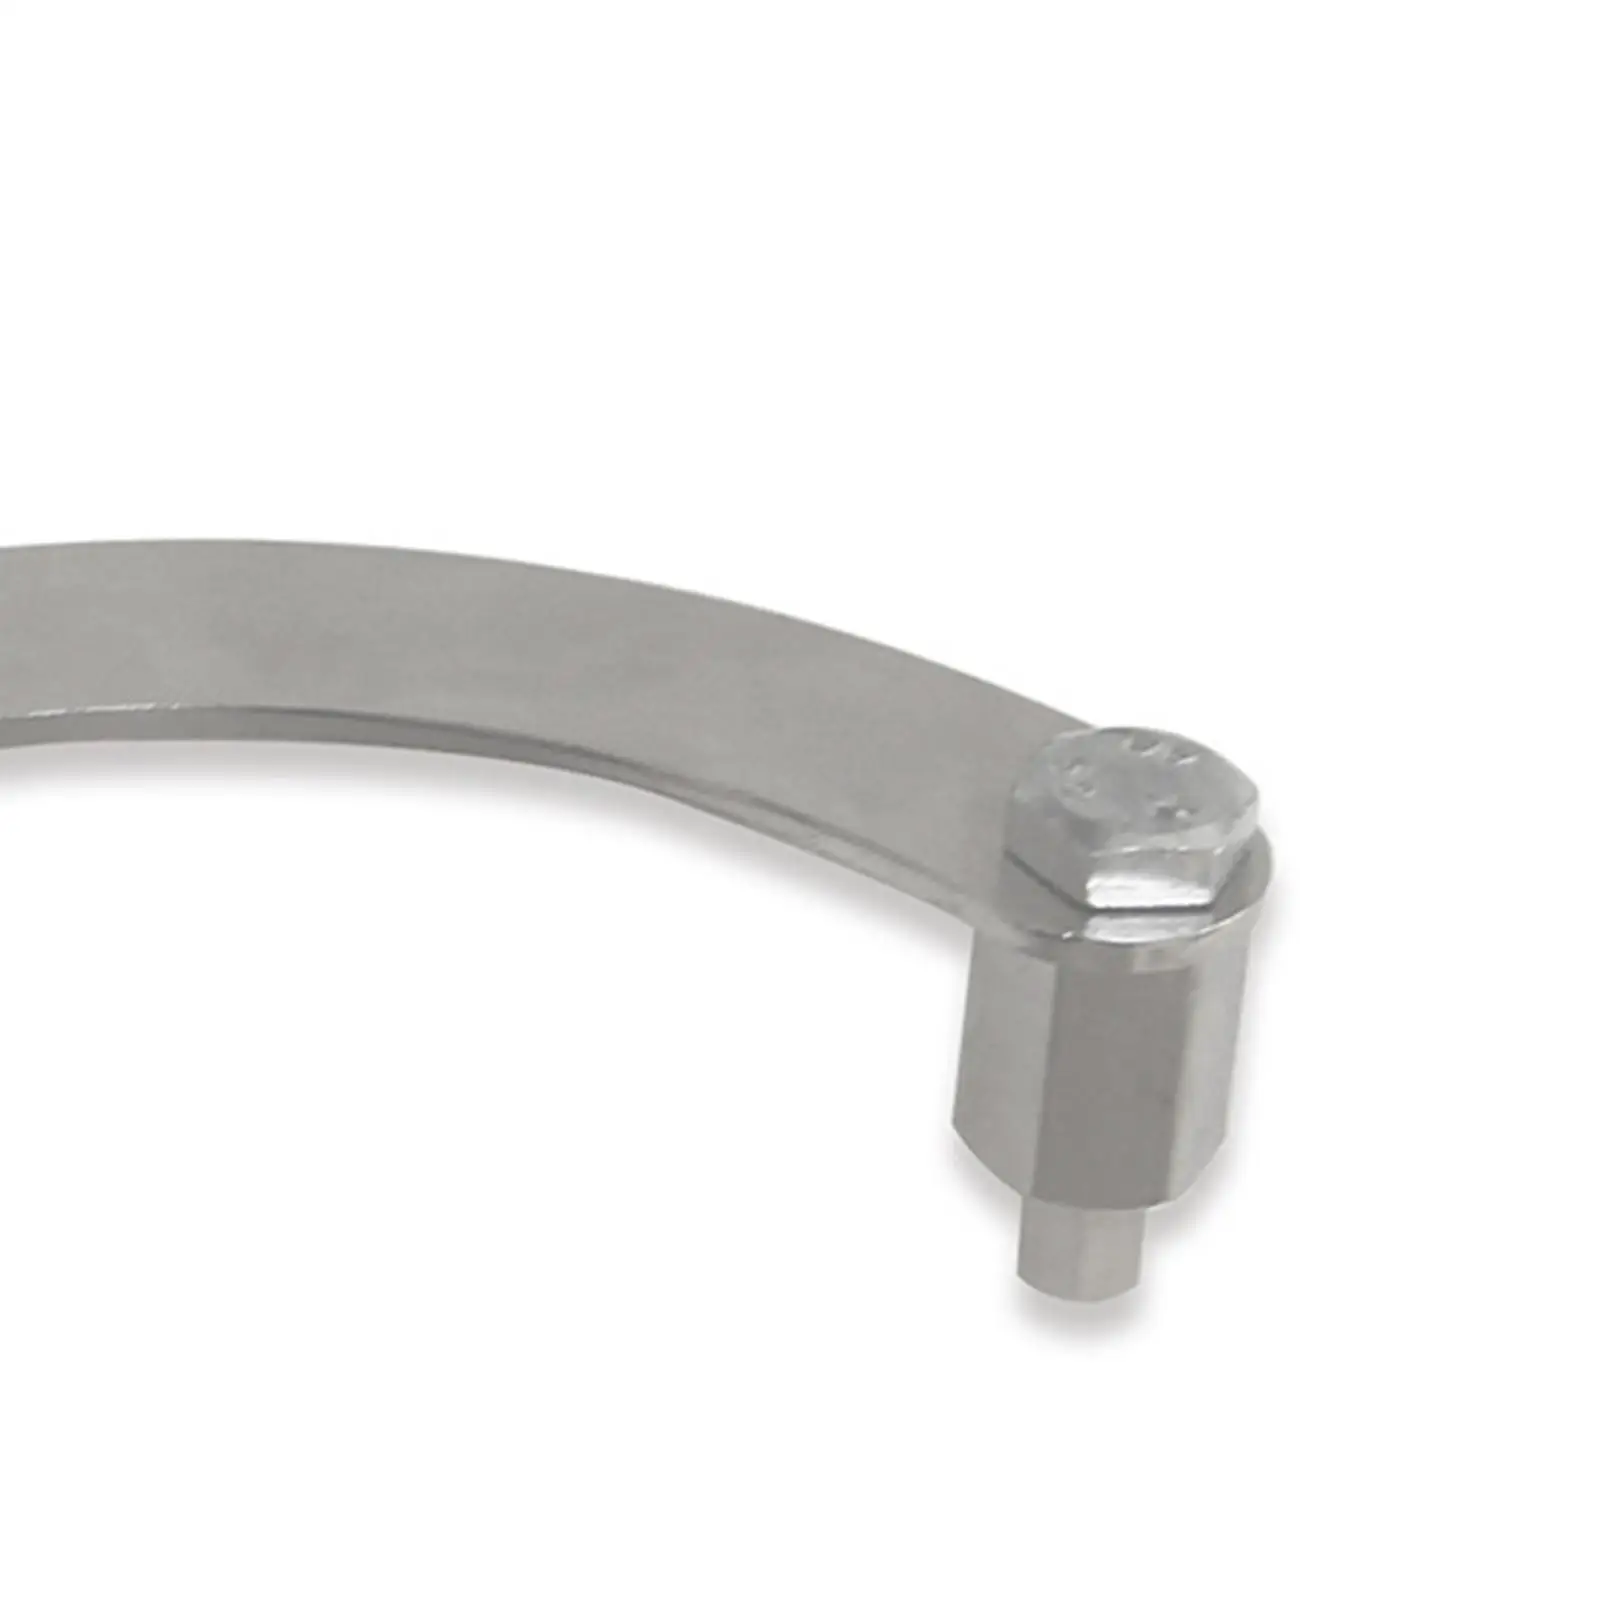 cam Gear Lock set Accessories for Subaru WRX Sti Fxt Lgt Durable